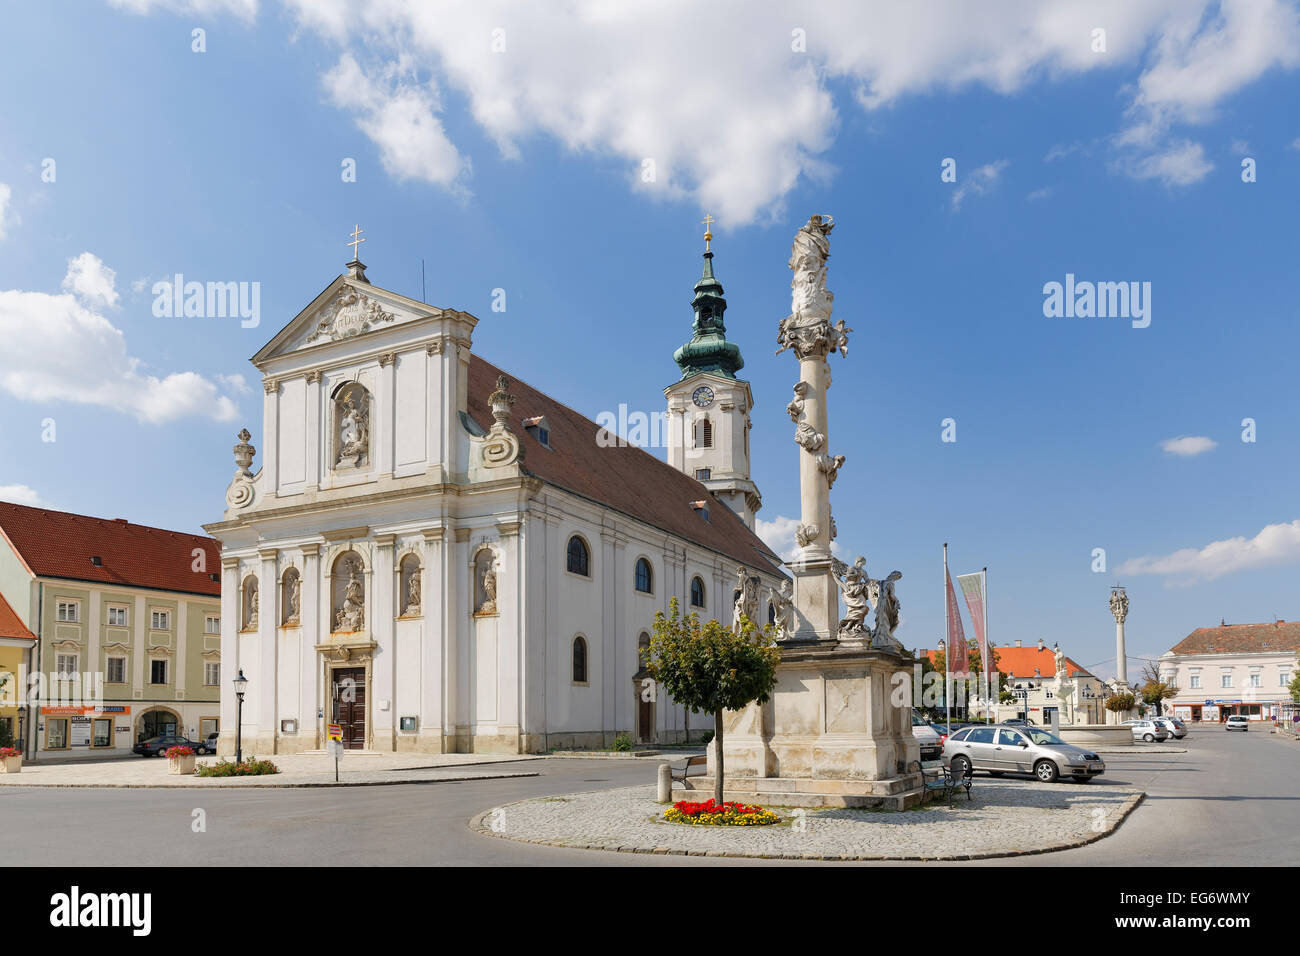 Parish Church of the Holy Trinity in the main square, Bruck an der Leitha, Industrieviertel quarter, Lower Austria, Austria Stock Photo